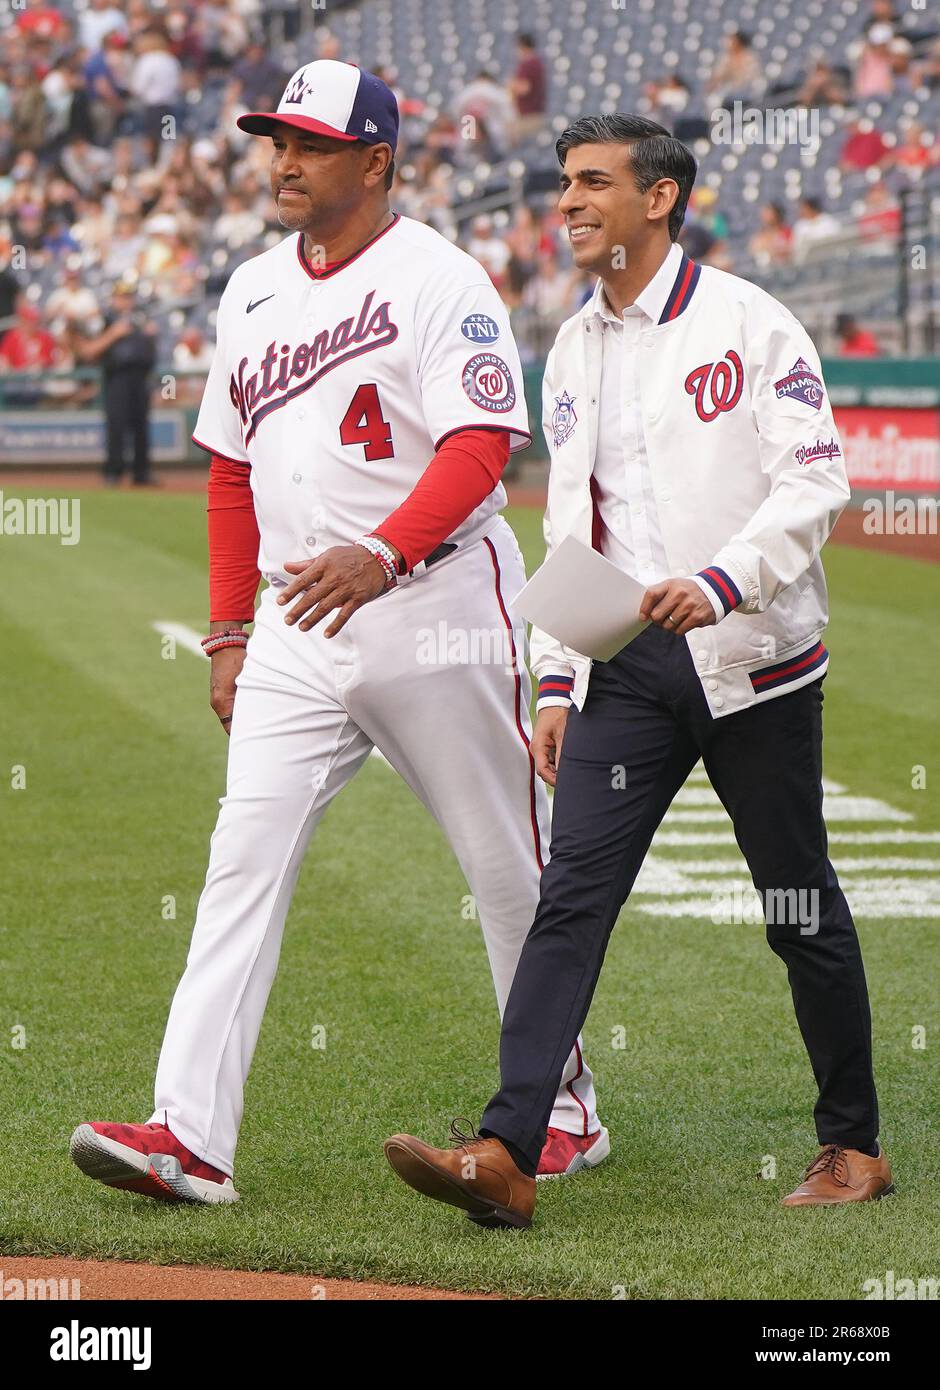 Prime Minister Rishi Sunak poses with Washington Nationals mascot Screech,  as he attends the Washington Nationals v Arizona Diamondbacks baseball at  Nationals Park during his visit to Washington DC in the US.